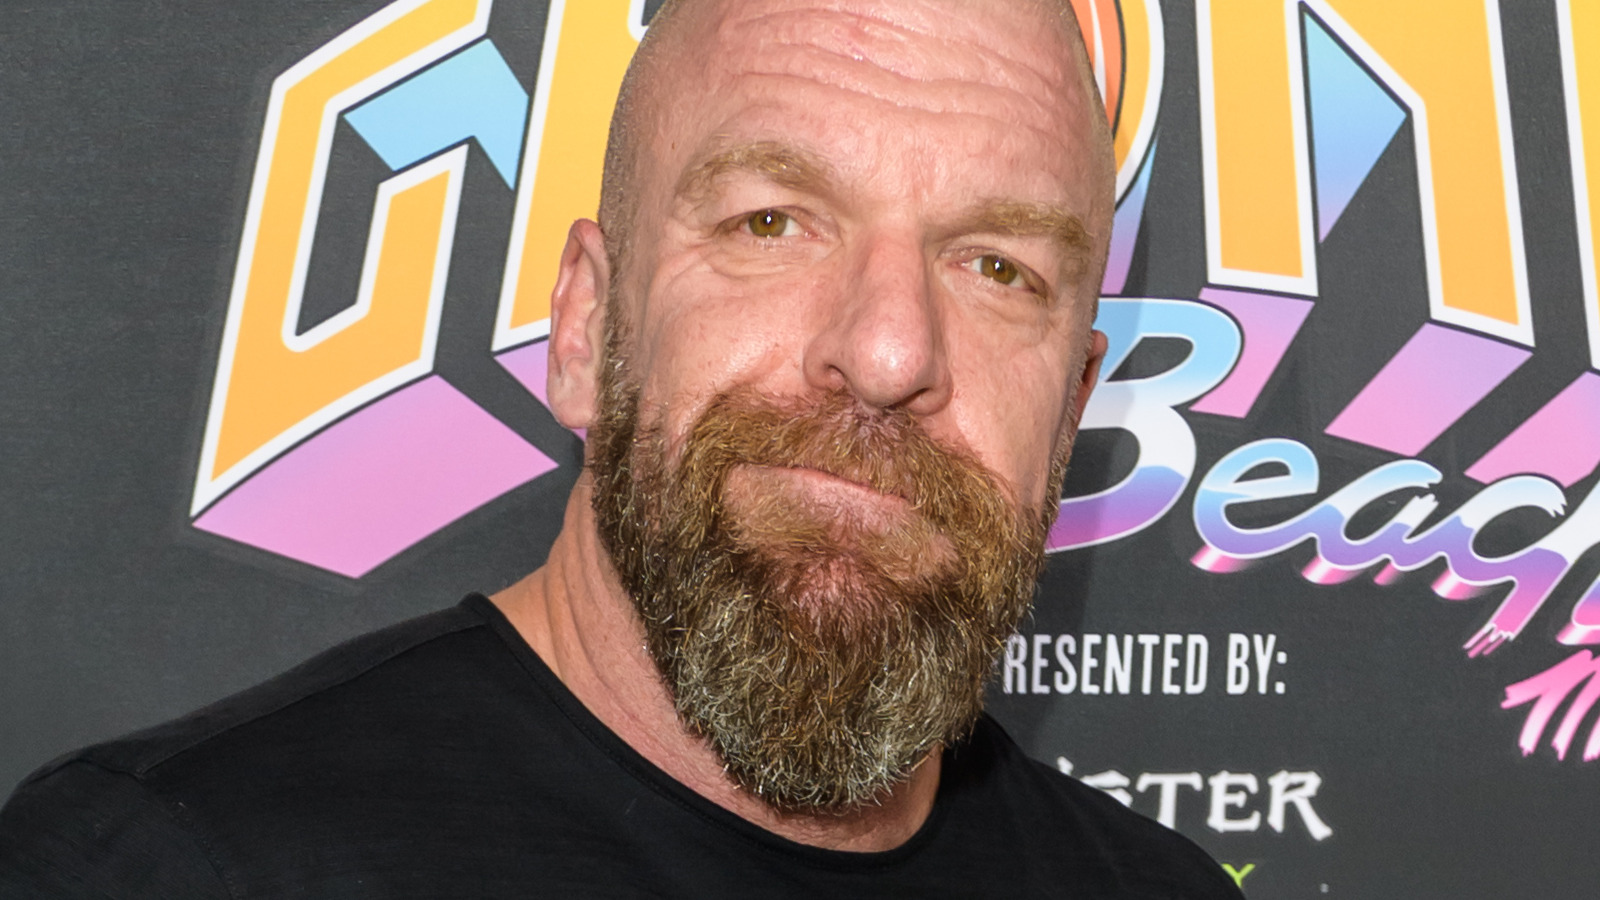 Triple H aprobó el cambio de nombre de la estrella de la WWE un mes antes de Royal Rumble